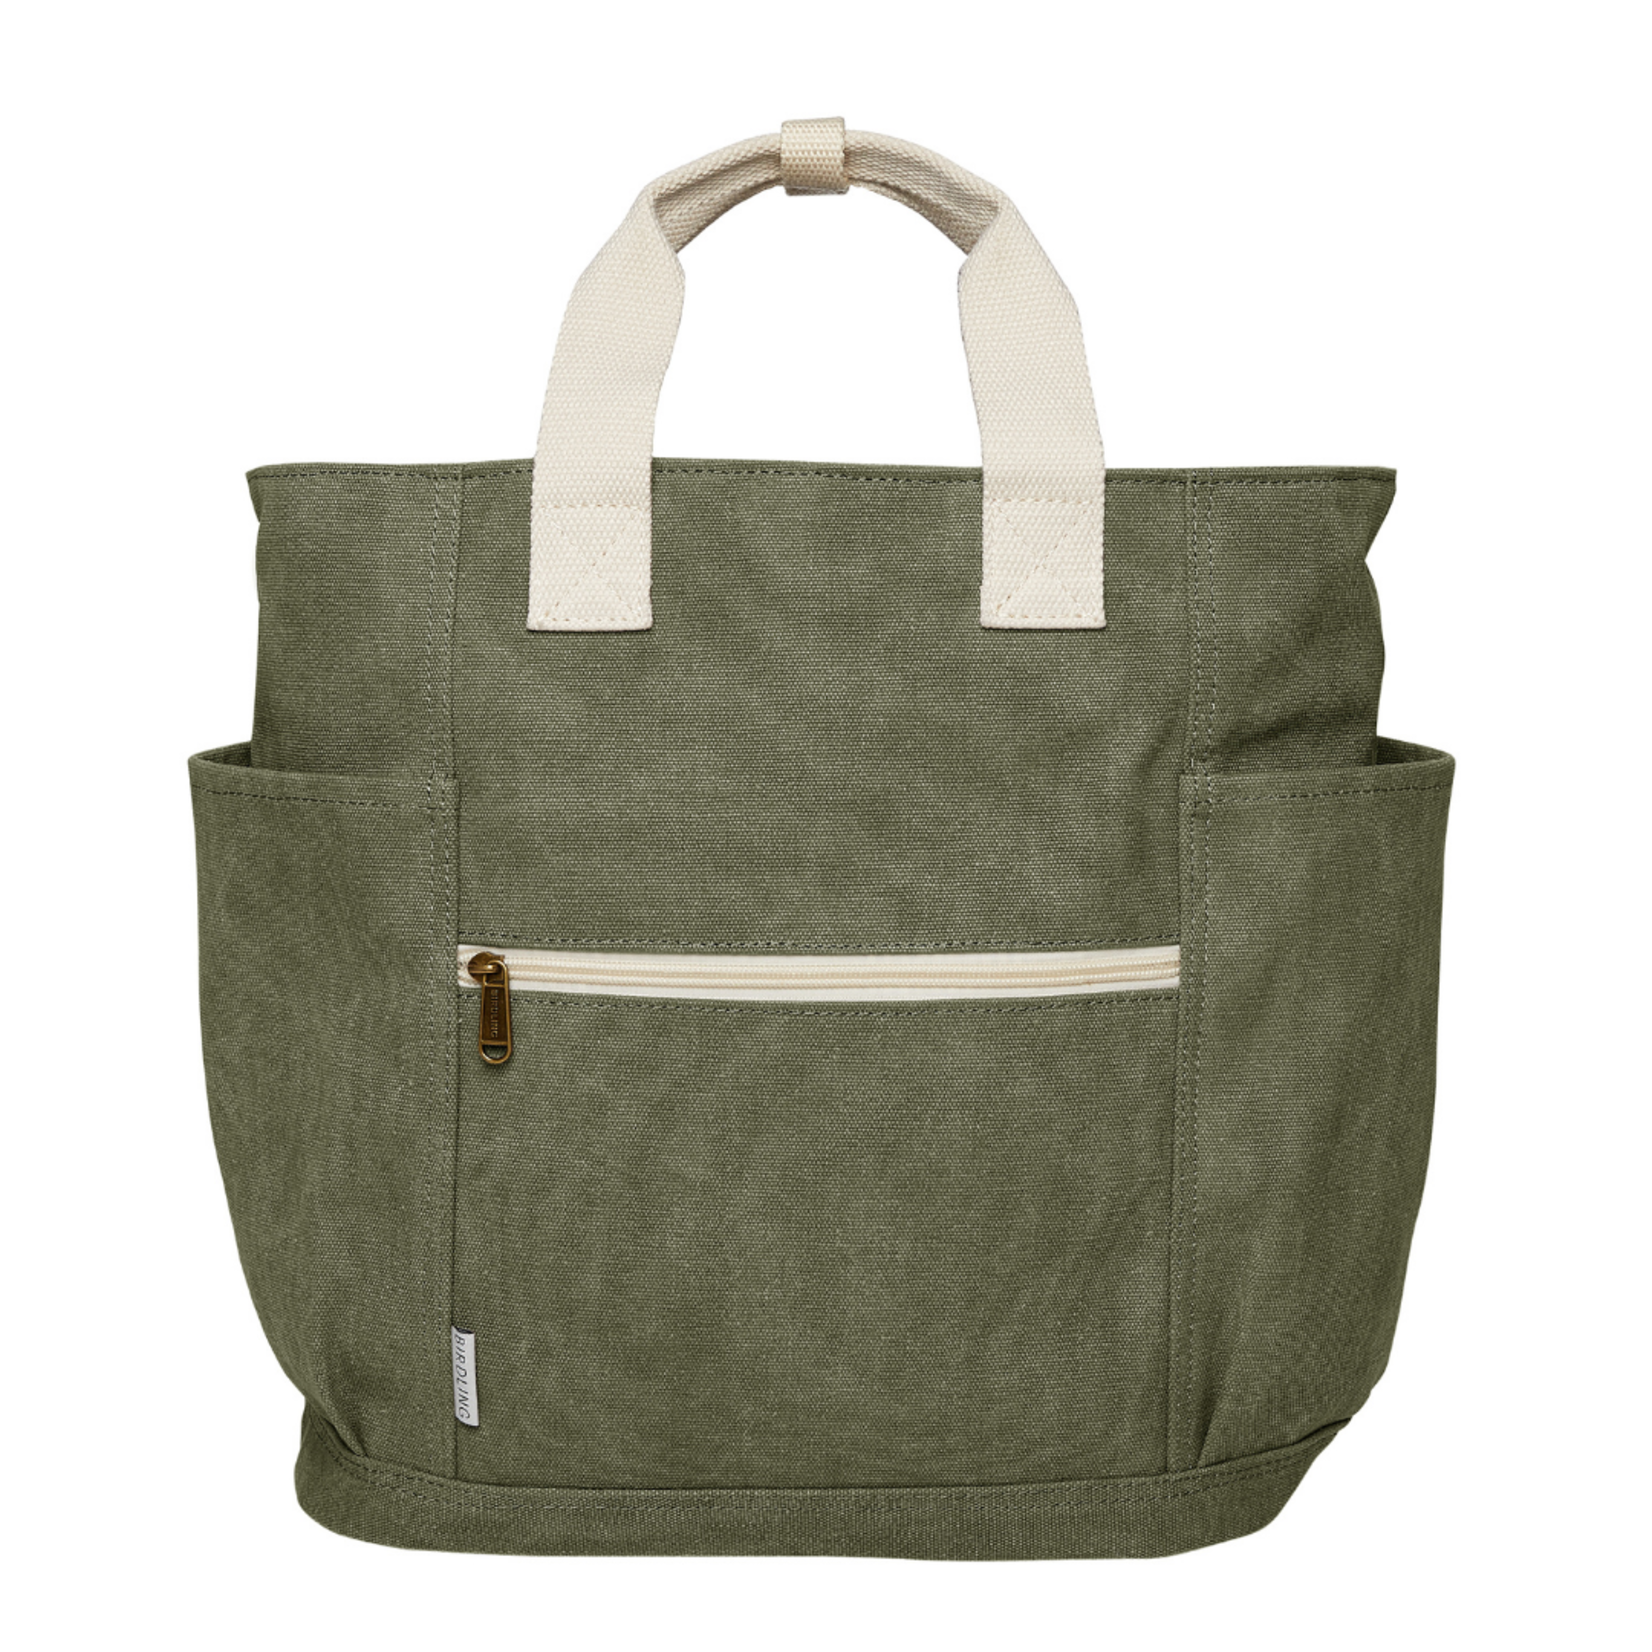 birdling bags olive backpacker